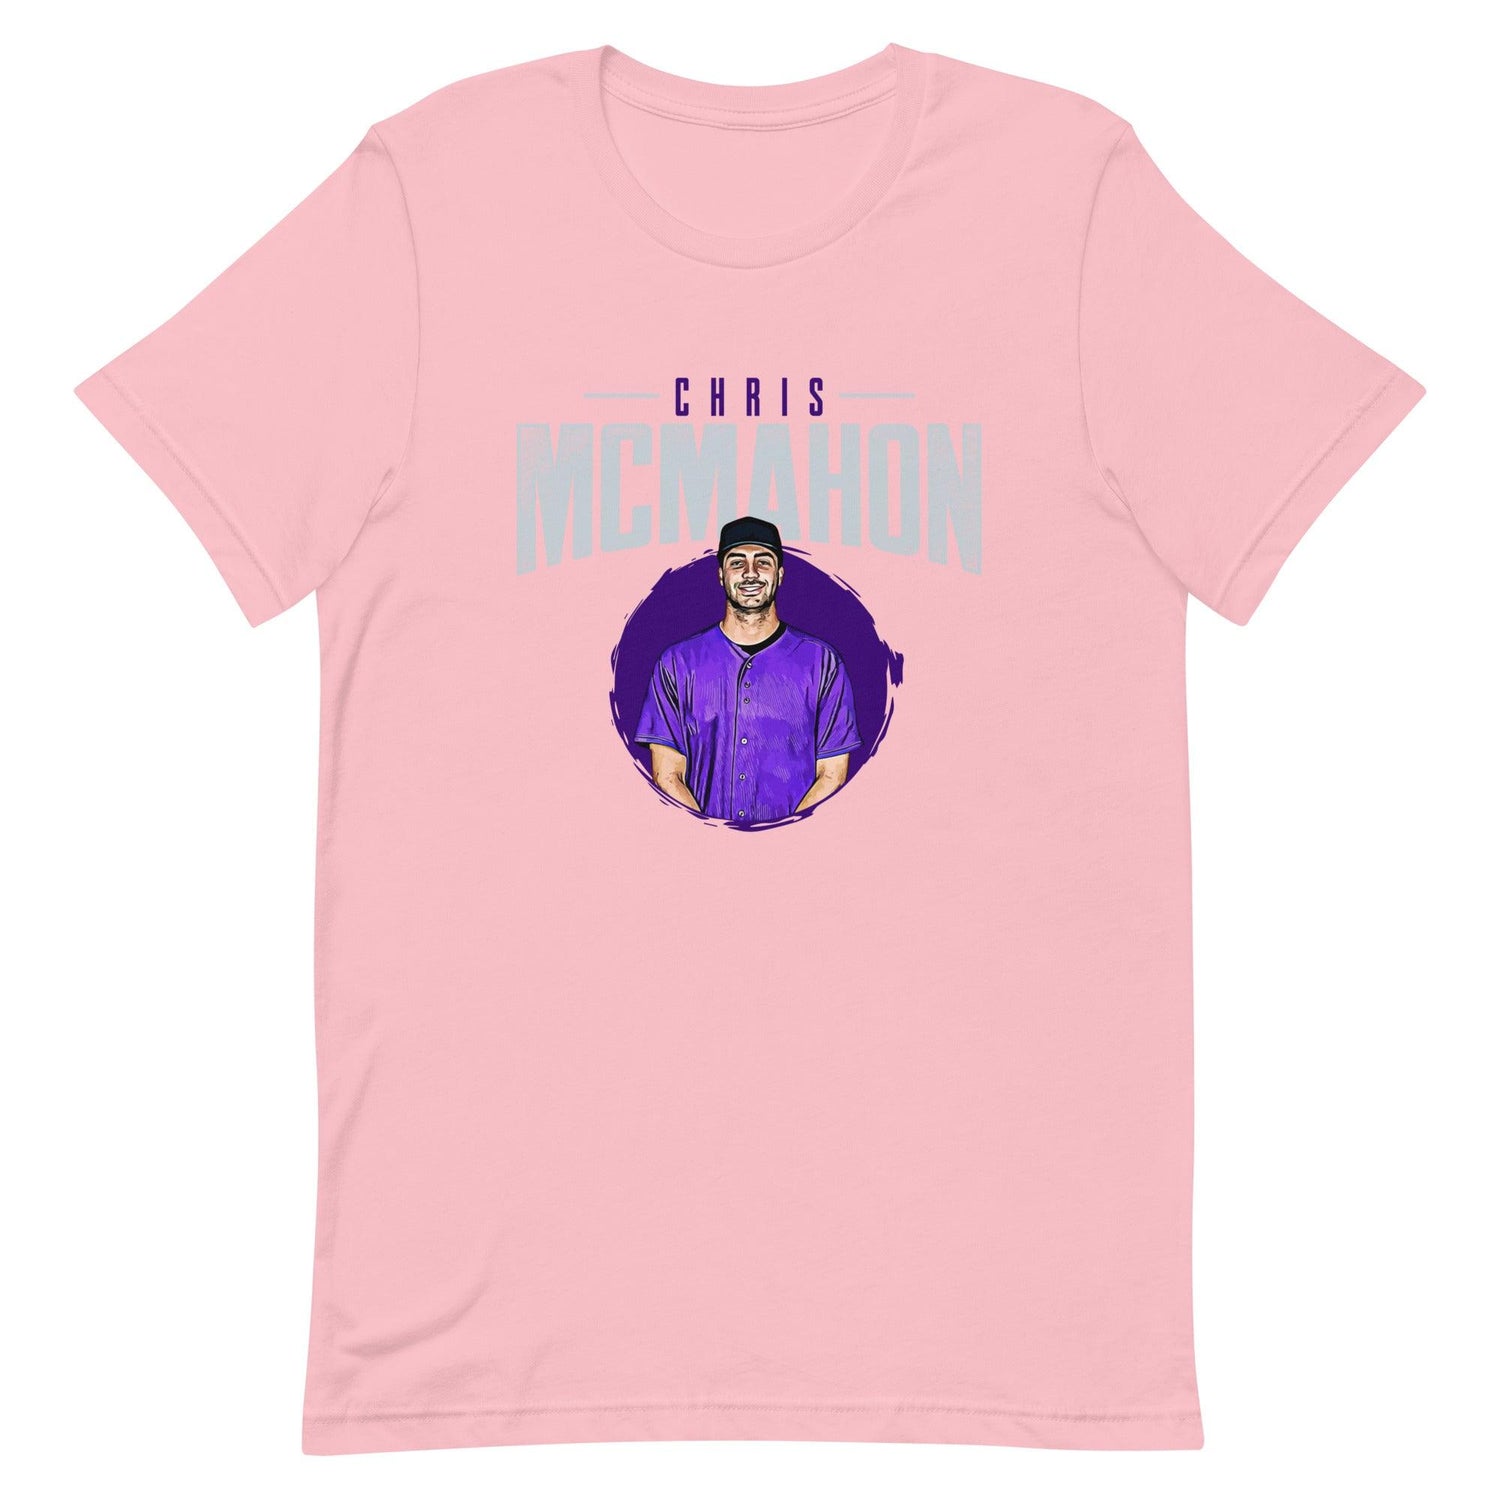 Chris McMahon "Lineup" t-shirt - Fan Arch